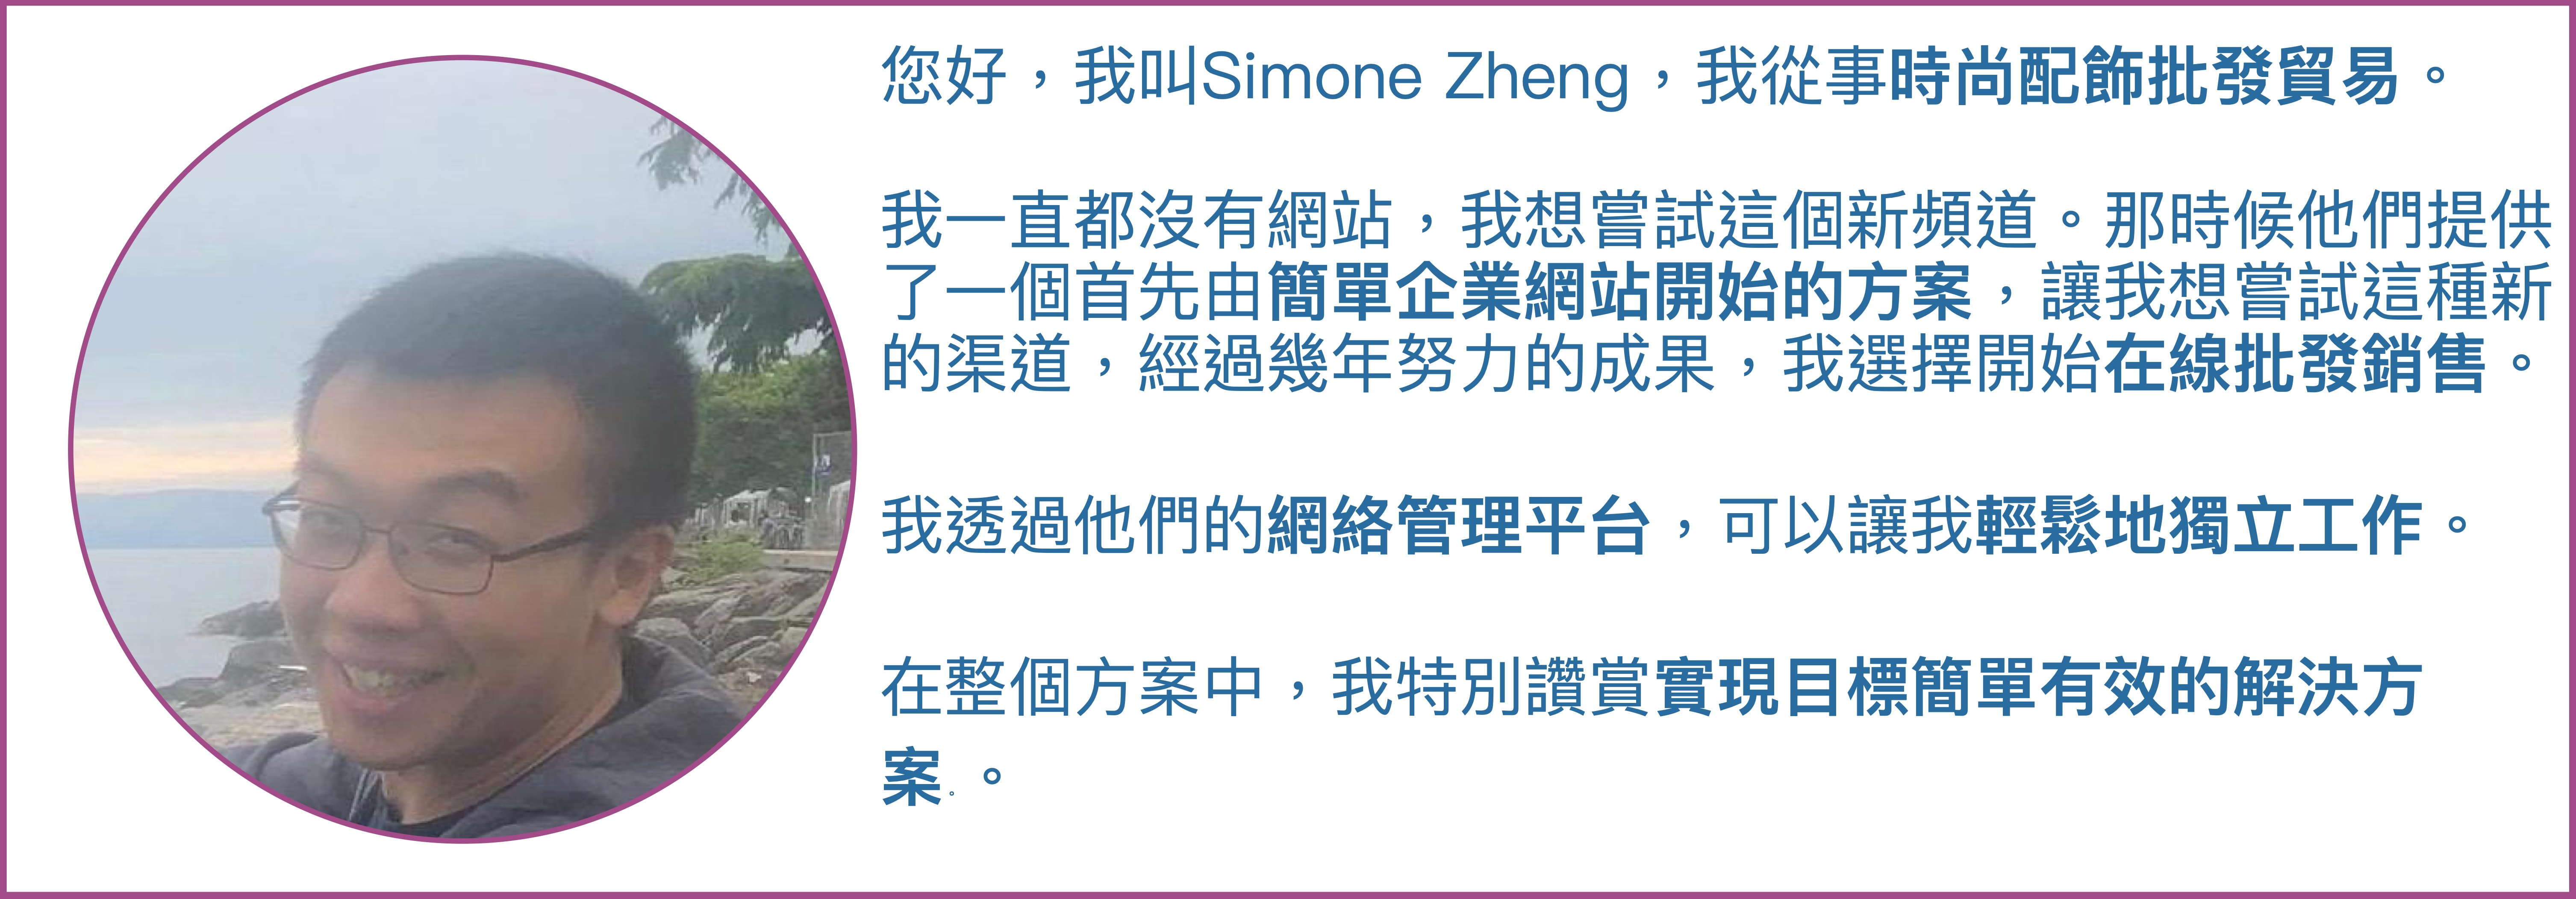 Simone-Zheng.jpg